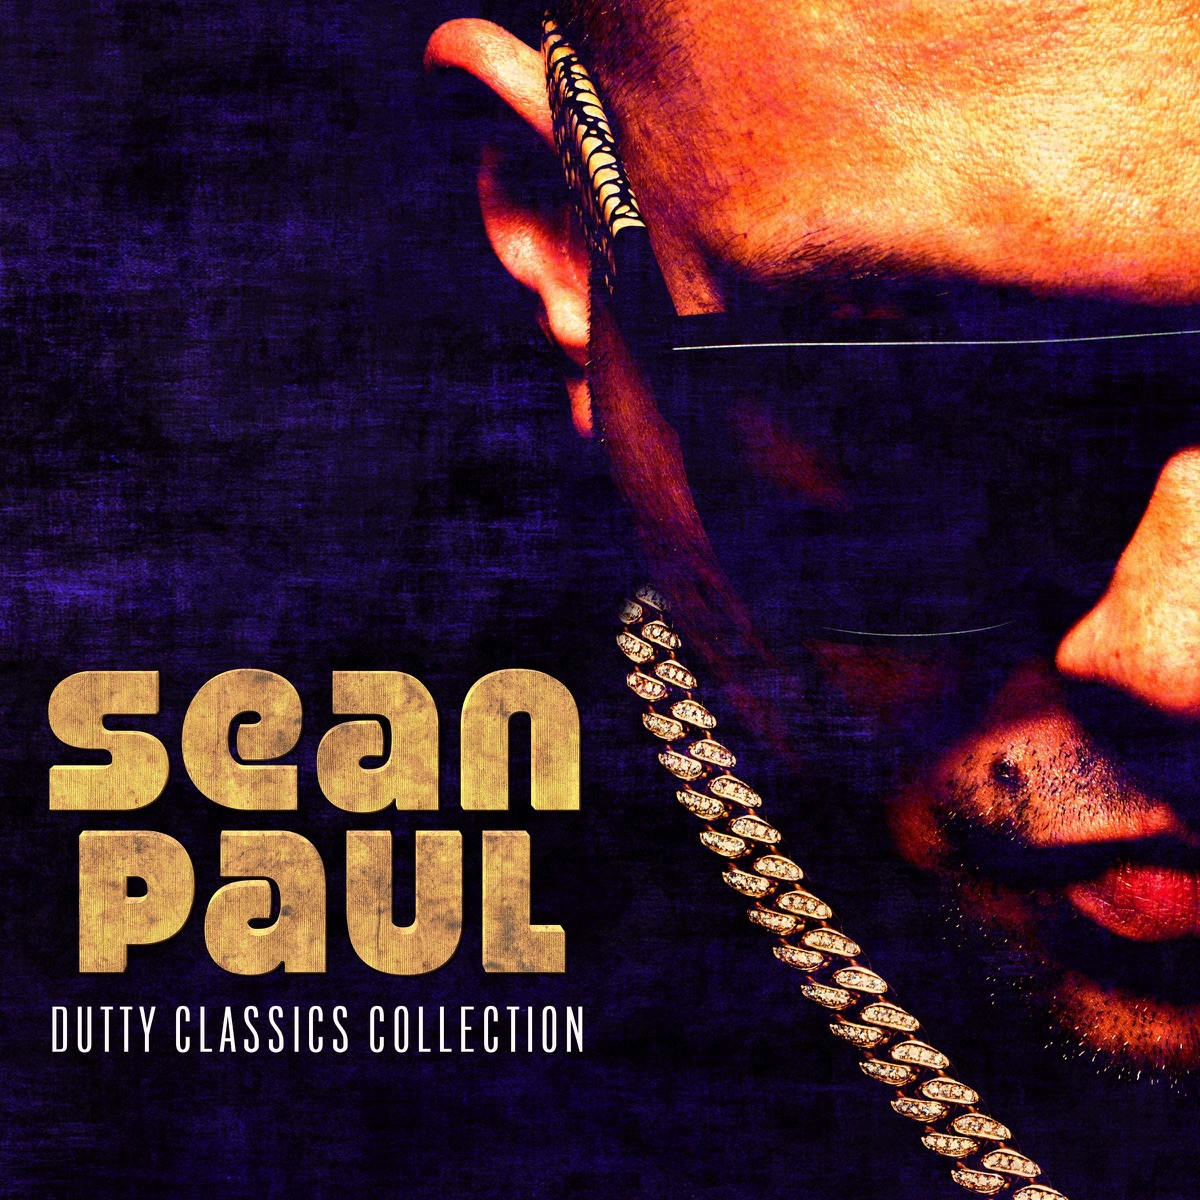 Sean Paul - Dutty Rock -  Music